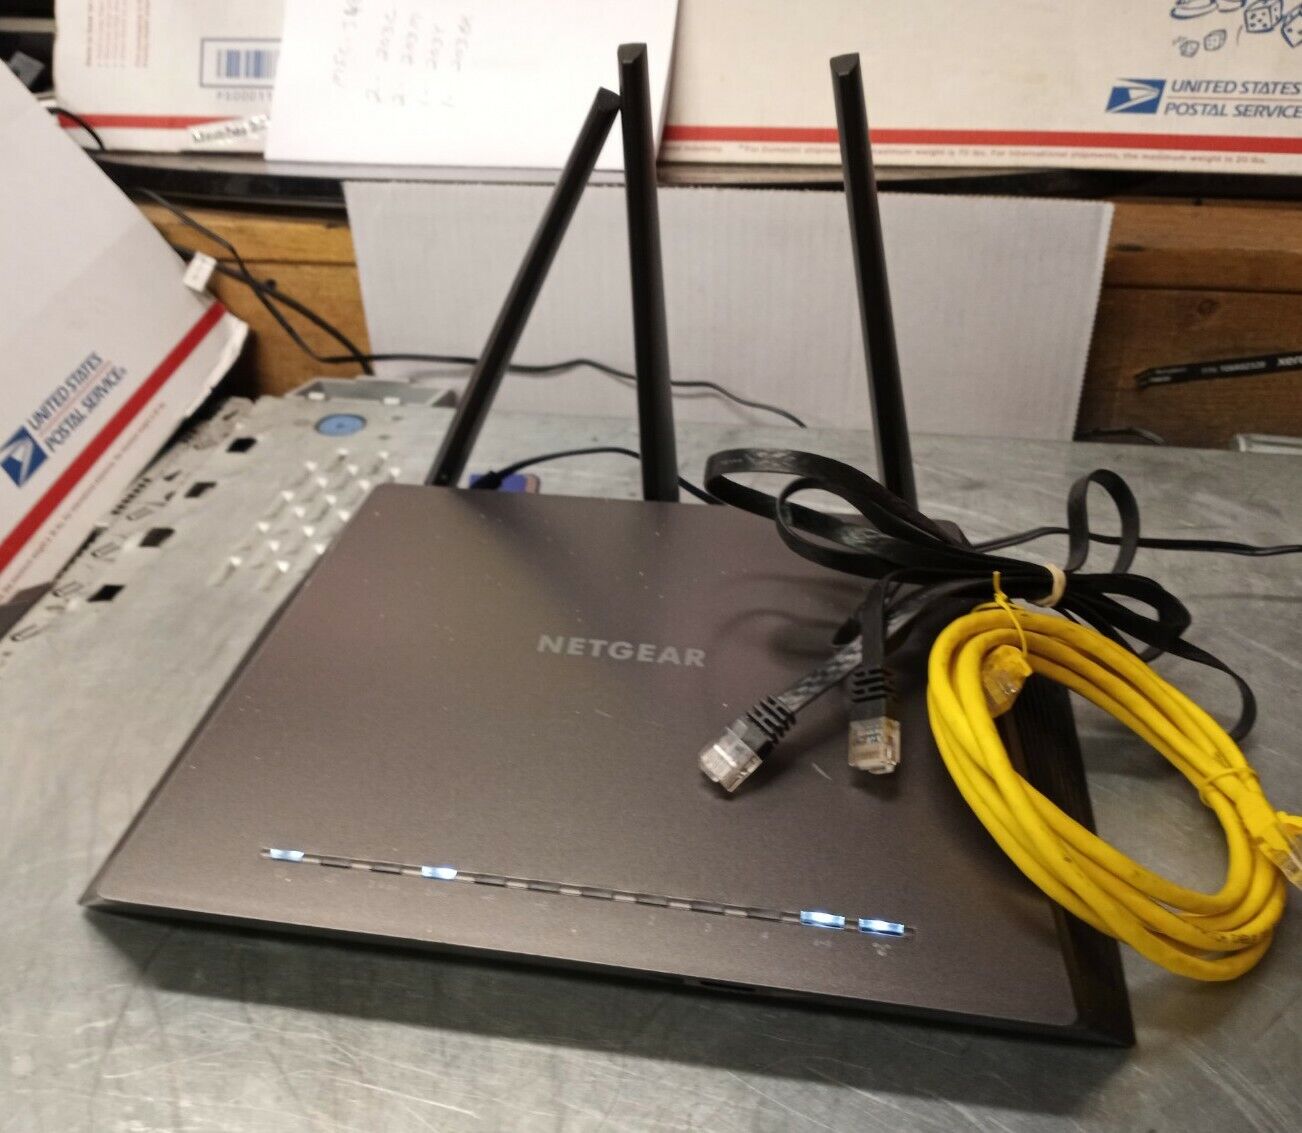 NETGEAR Nighthawk AC2300 Cybersecurity Dual-Band Wi-Fi Router - RS400-100NAS